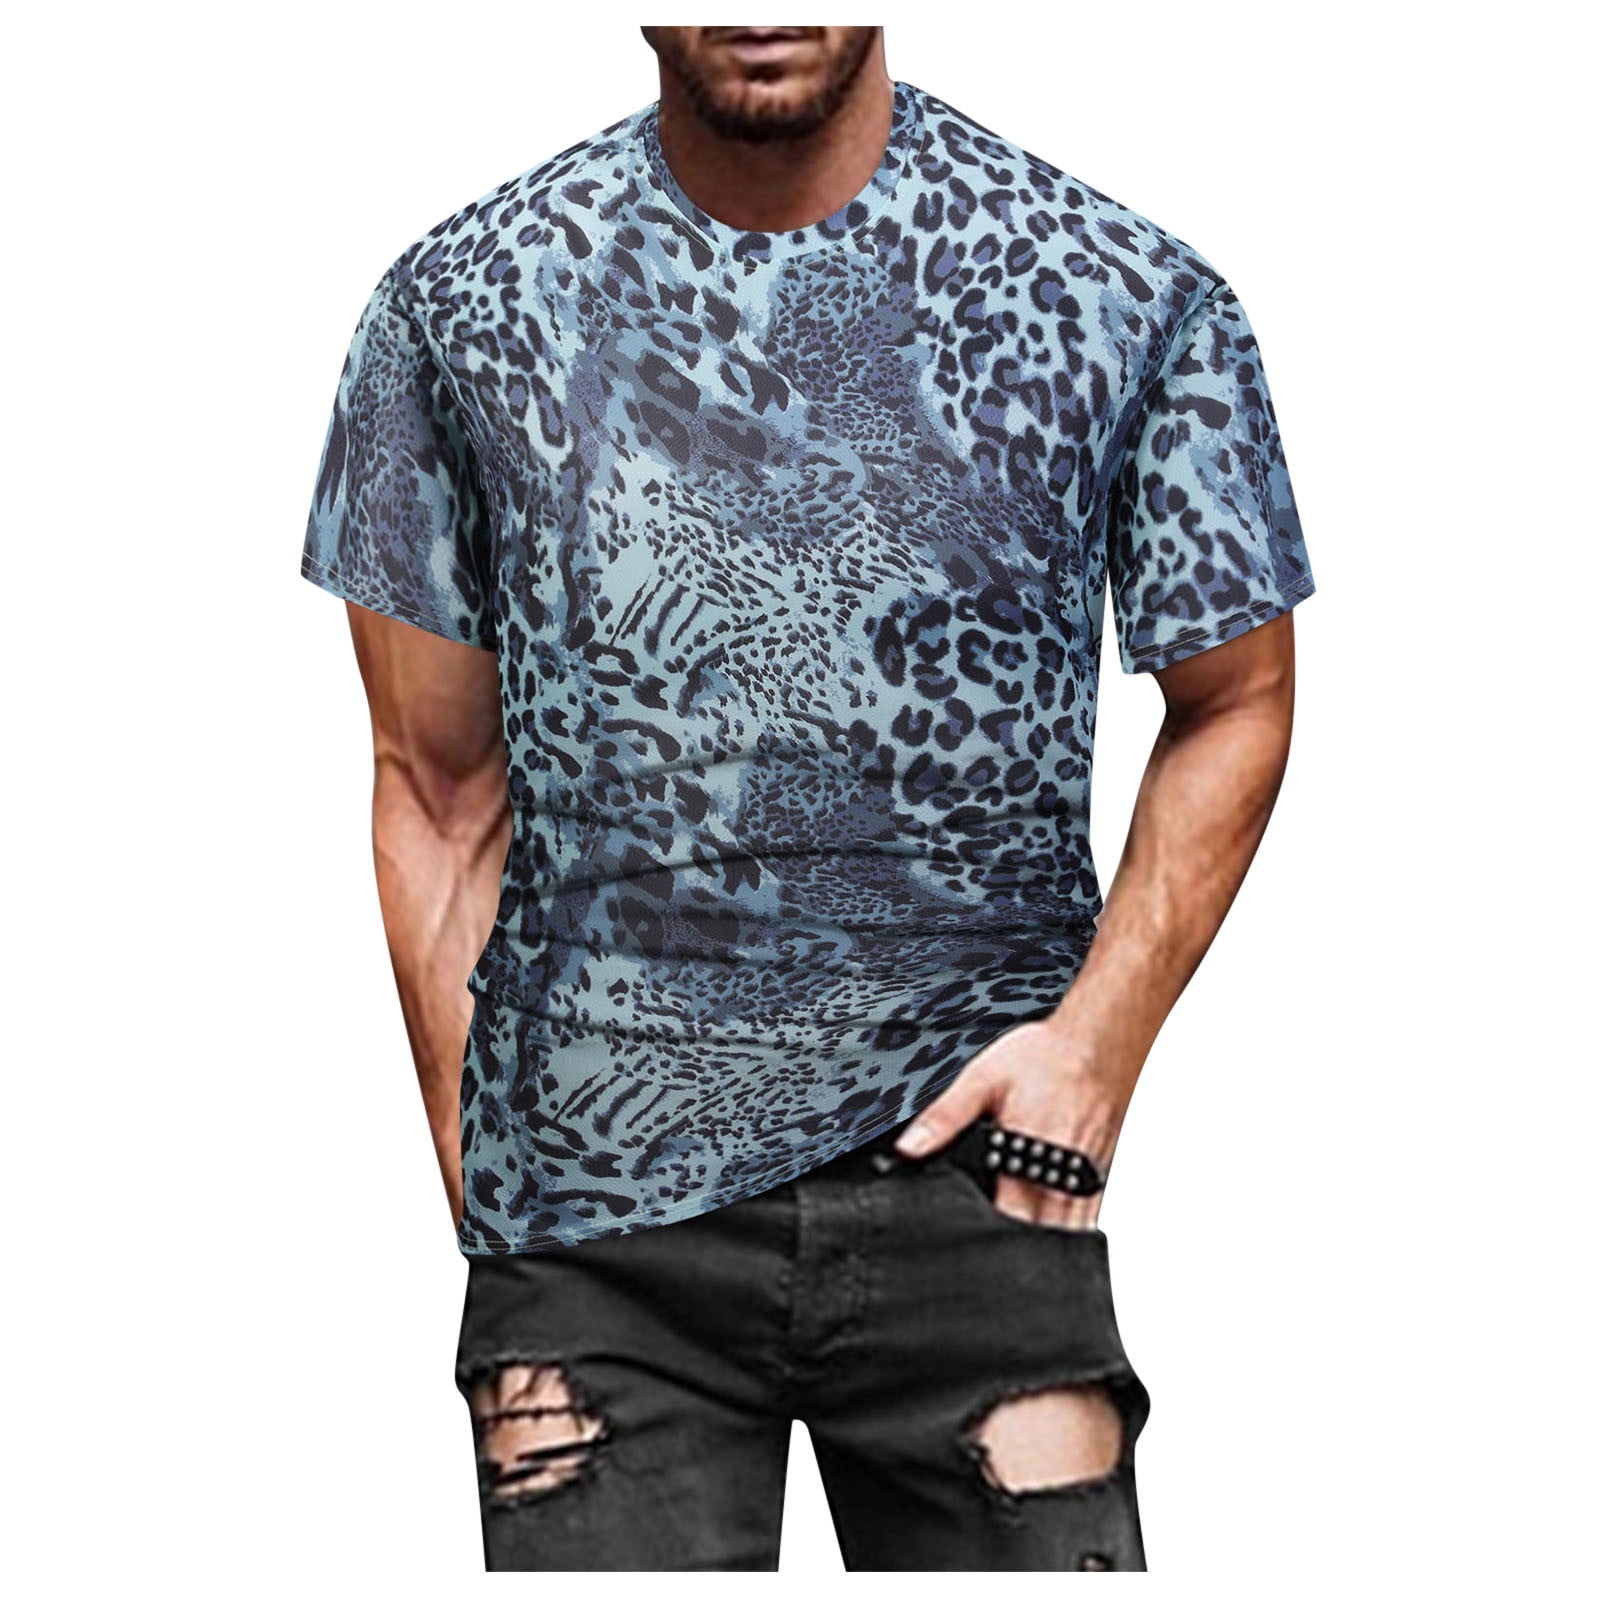 VSSSJ Casual Shirts for Men Regular Fit Fashon 3D Leopard Print